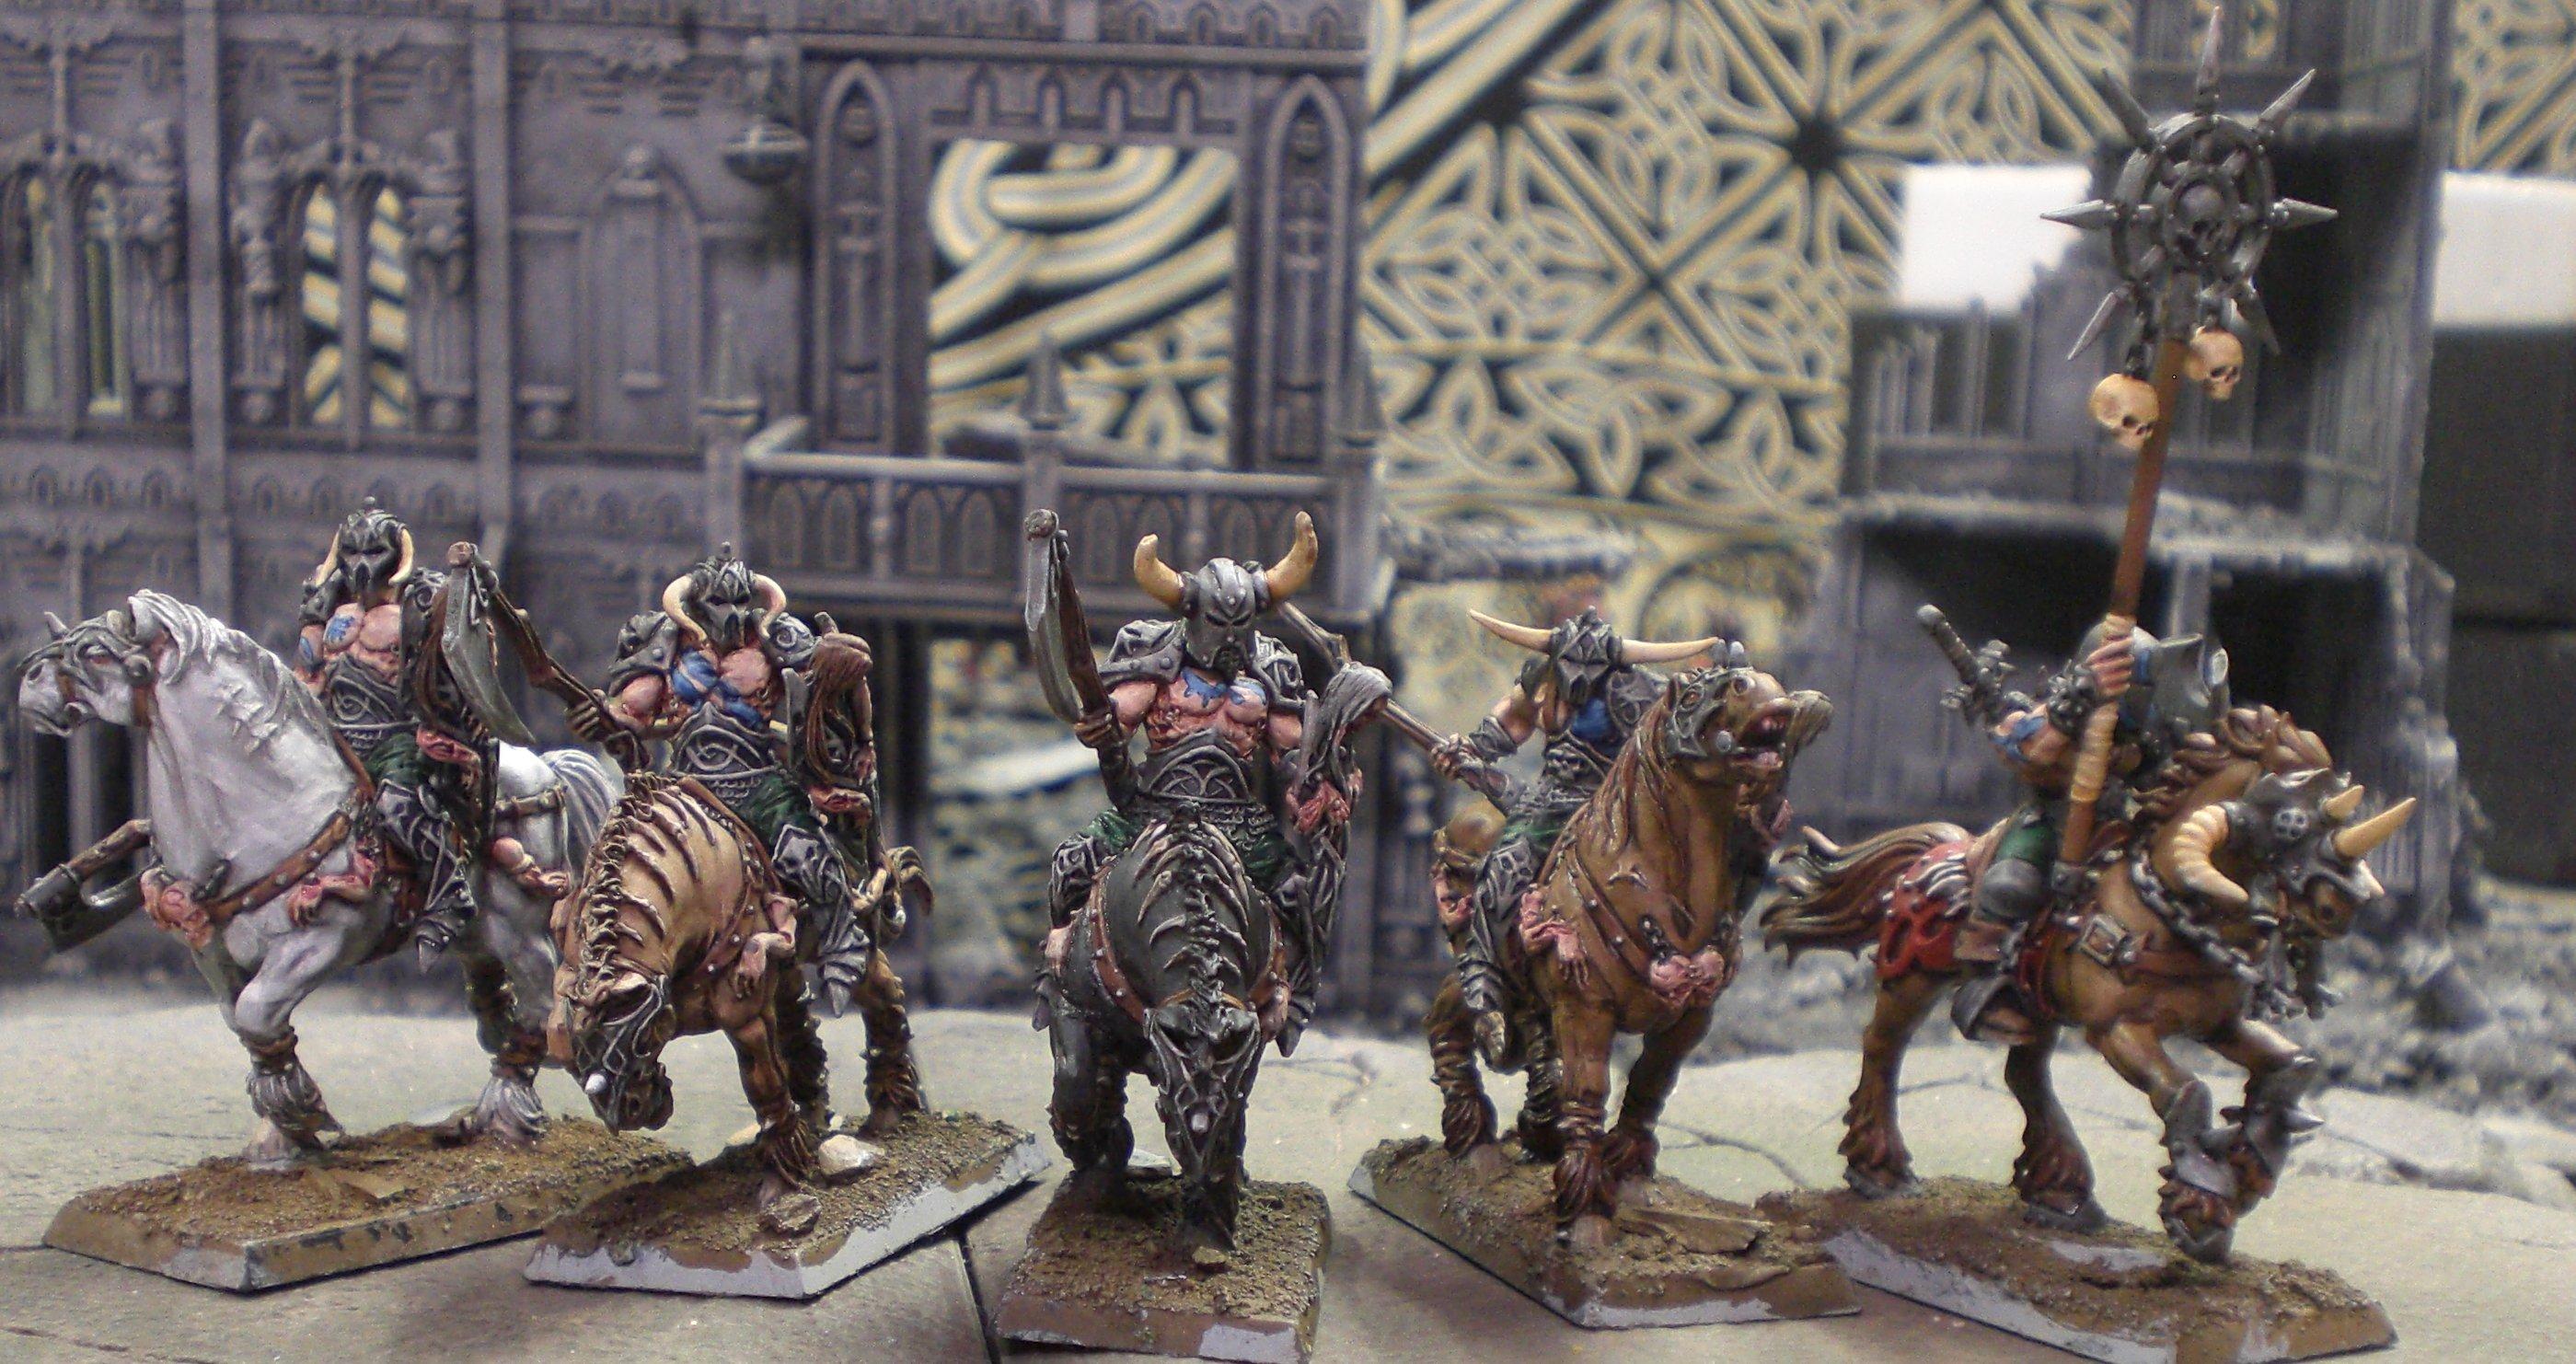 Cavalry, Drune, Rackham, Warhammer Fantasy, Warriors Of Chaos